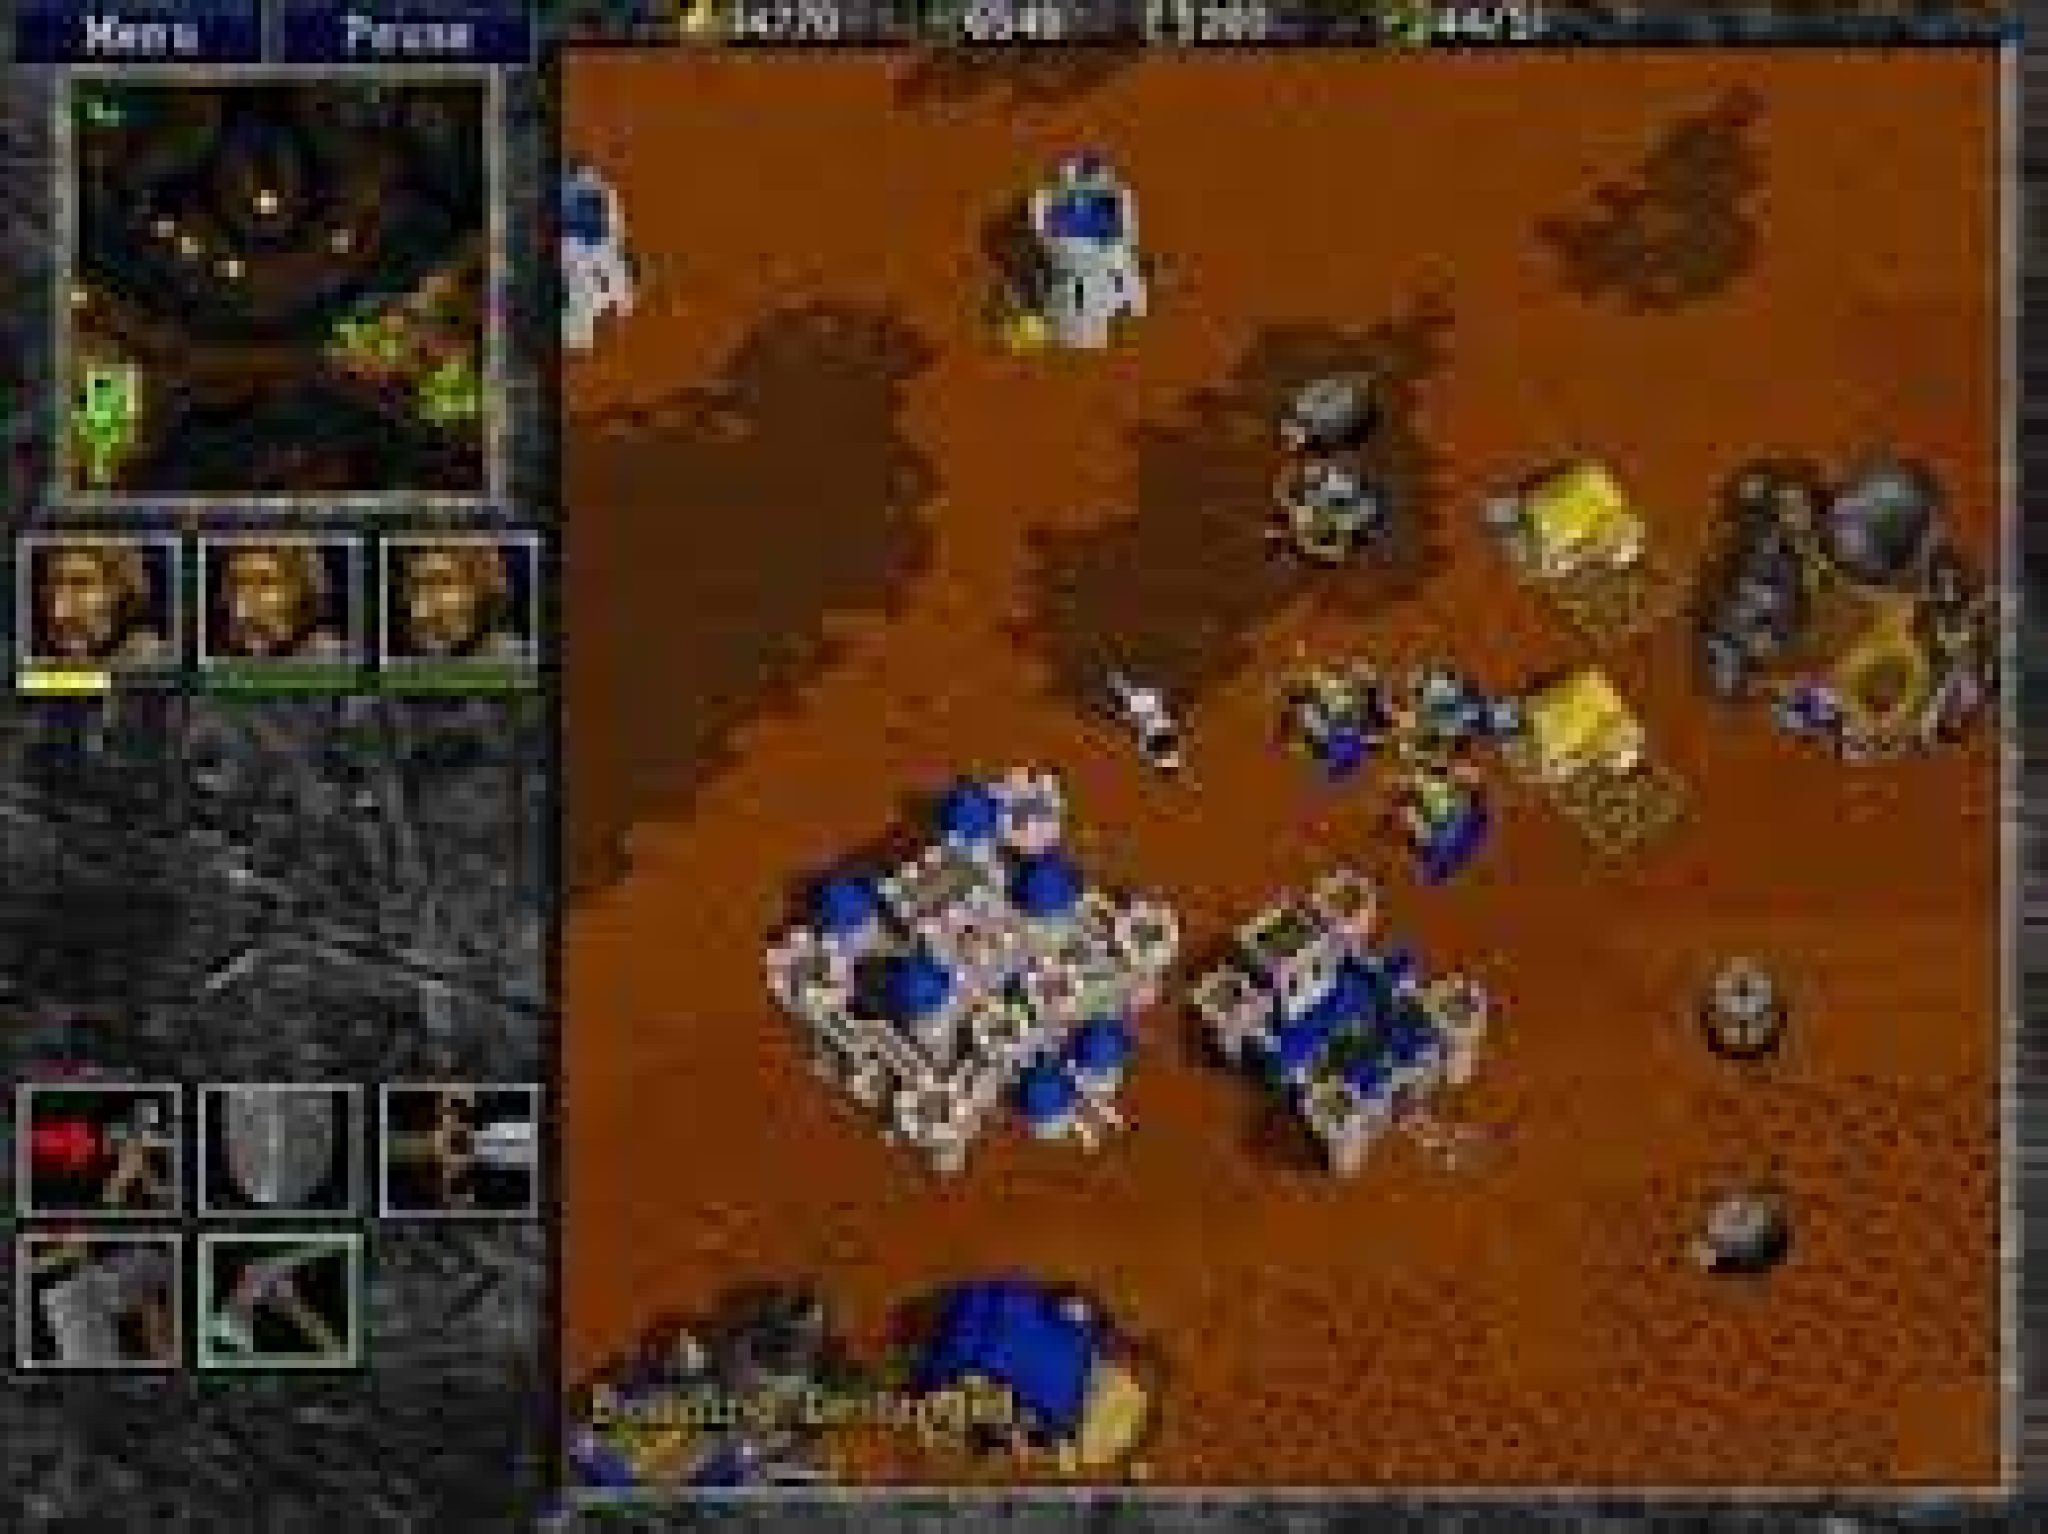 download warcraft ii tides of darkness 1995